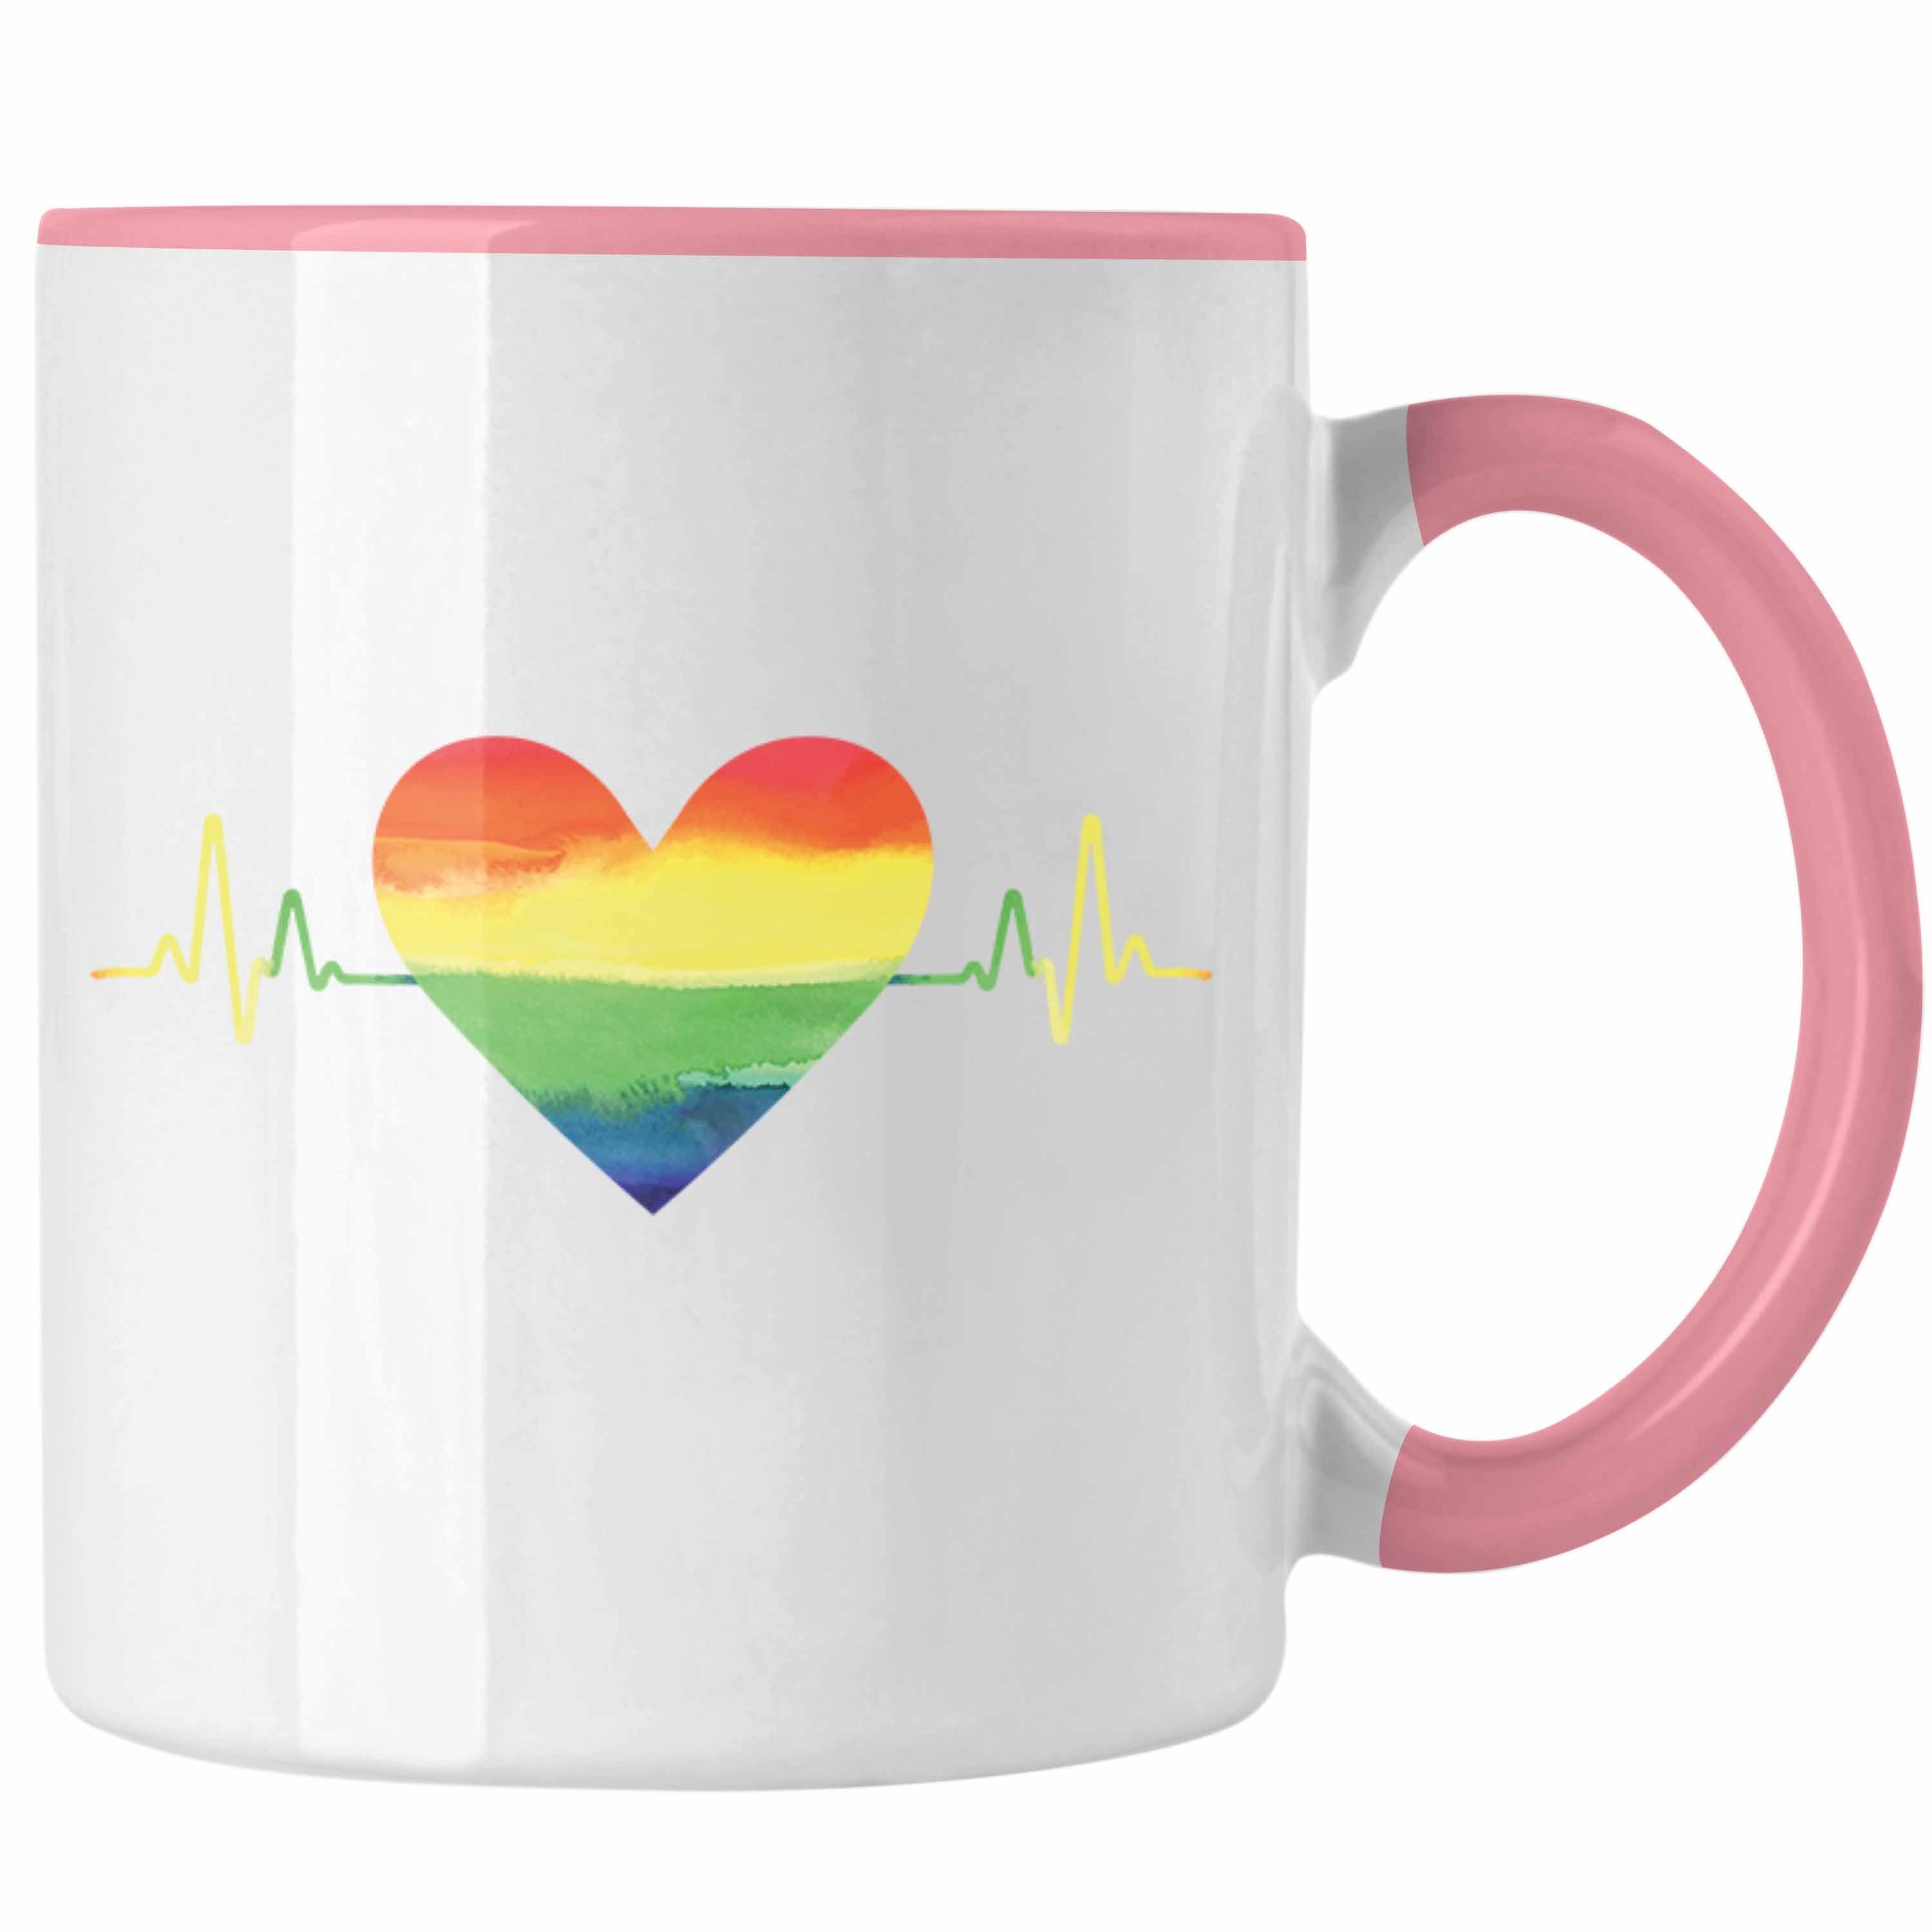 Trendation Tasse Trendation - Regenbogen Tasse Geschenk LGBT Schwule Lesben Transgender Grafik Pride Herzschlag Rosa